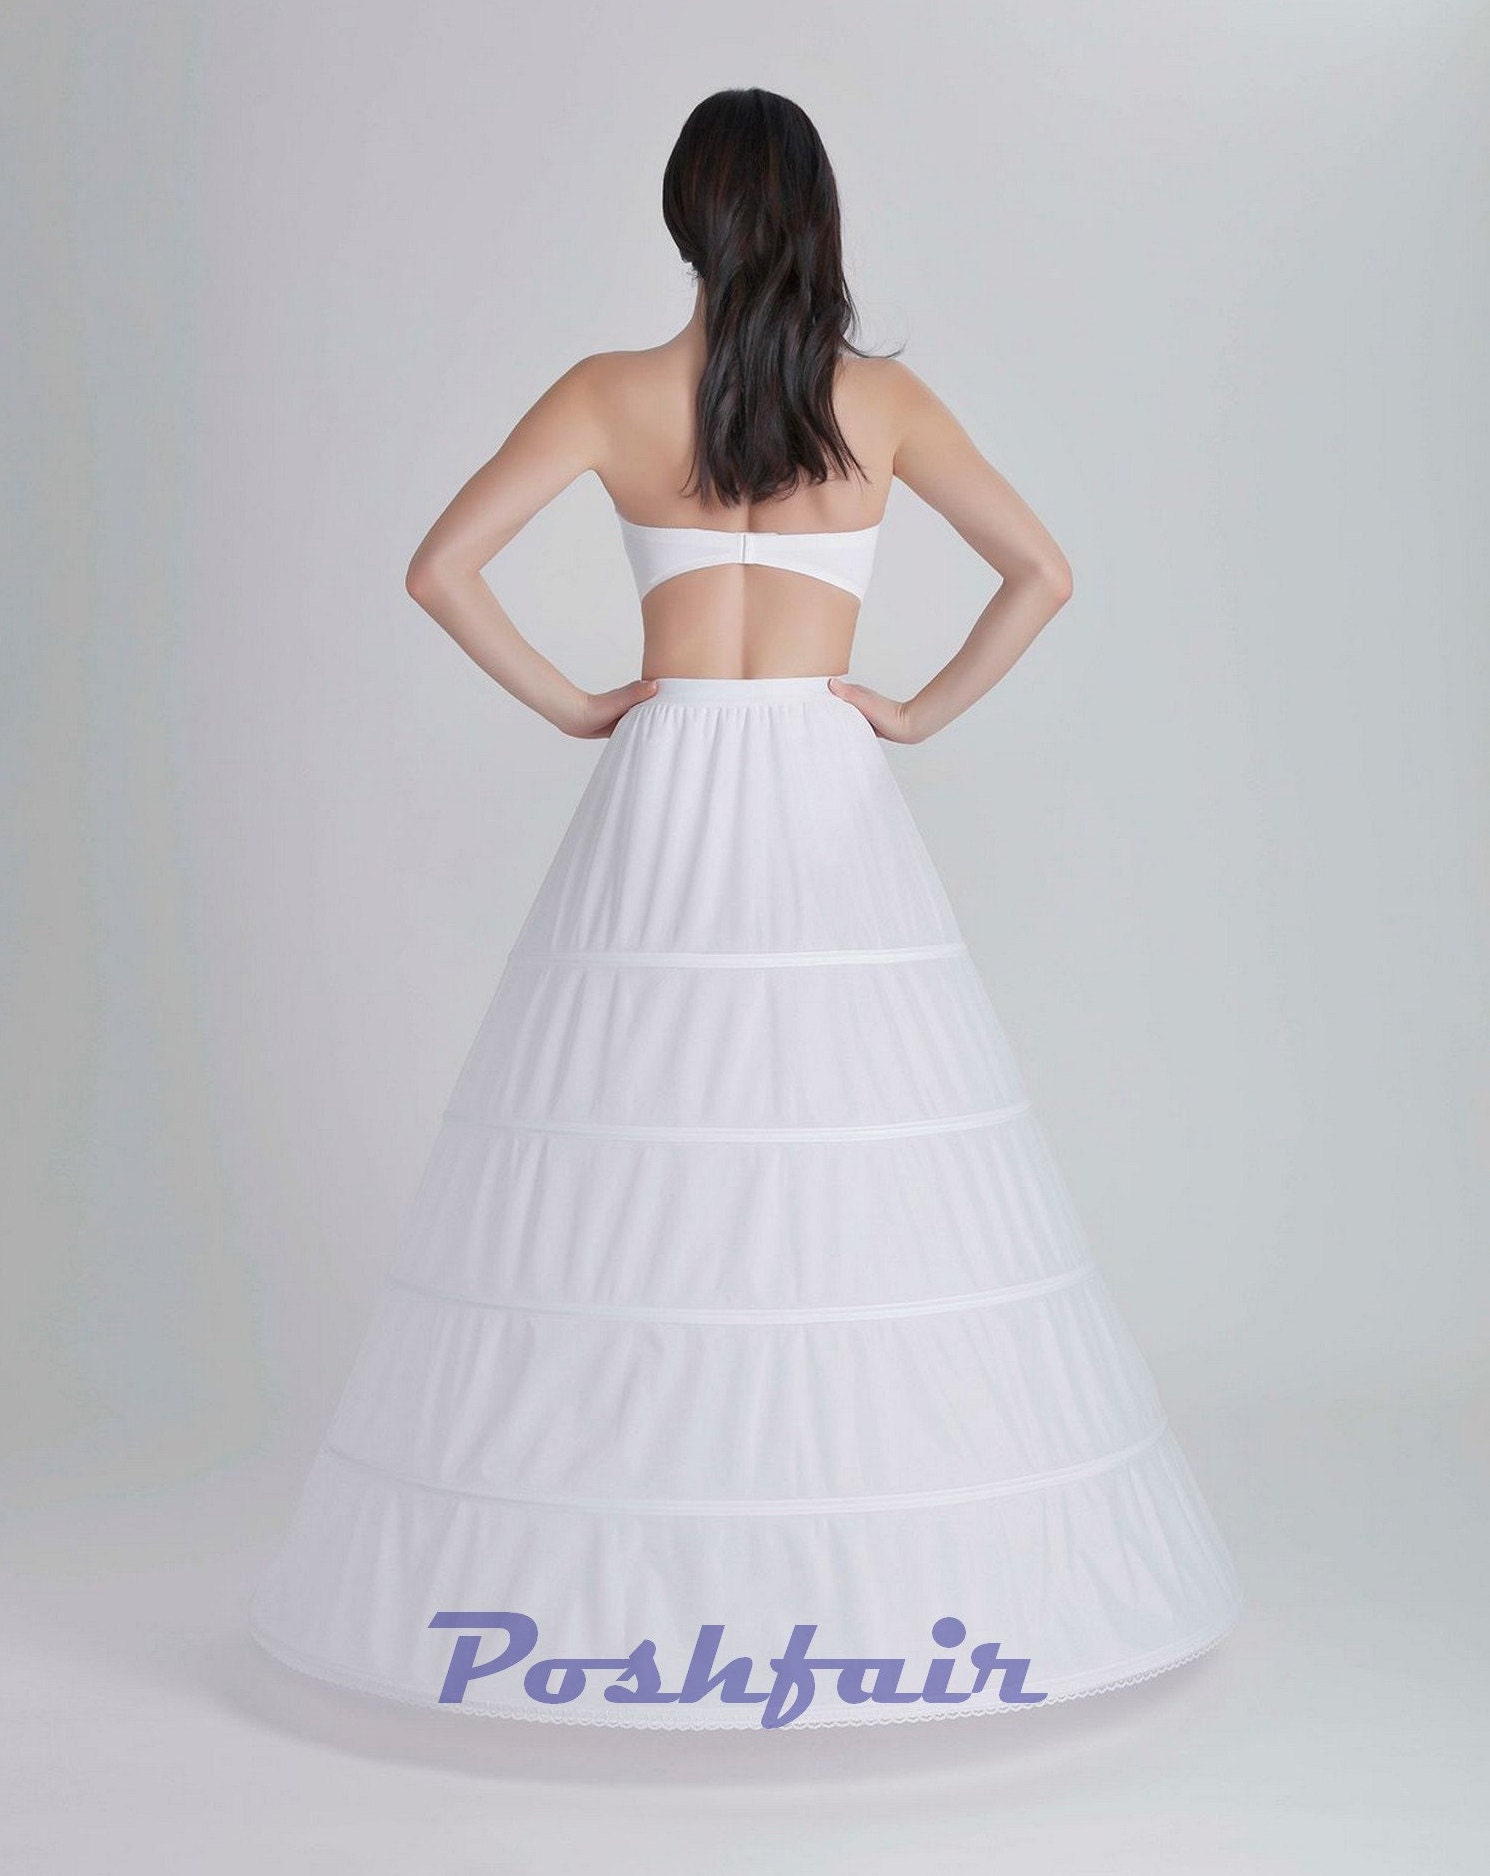 US STOCK Wedding Dress Bridal A Line/Hoops/Hoopless/Crinoline Petticoat/Slips 